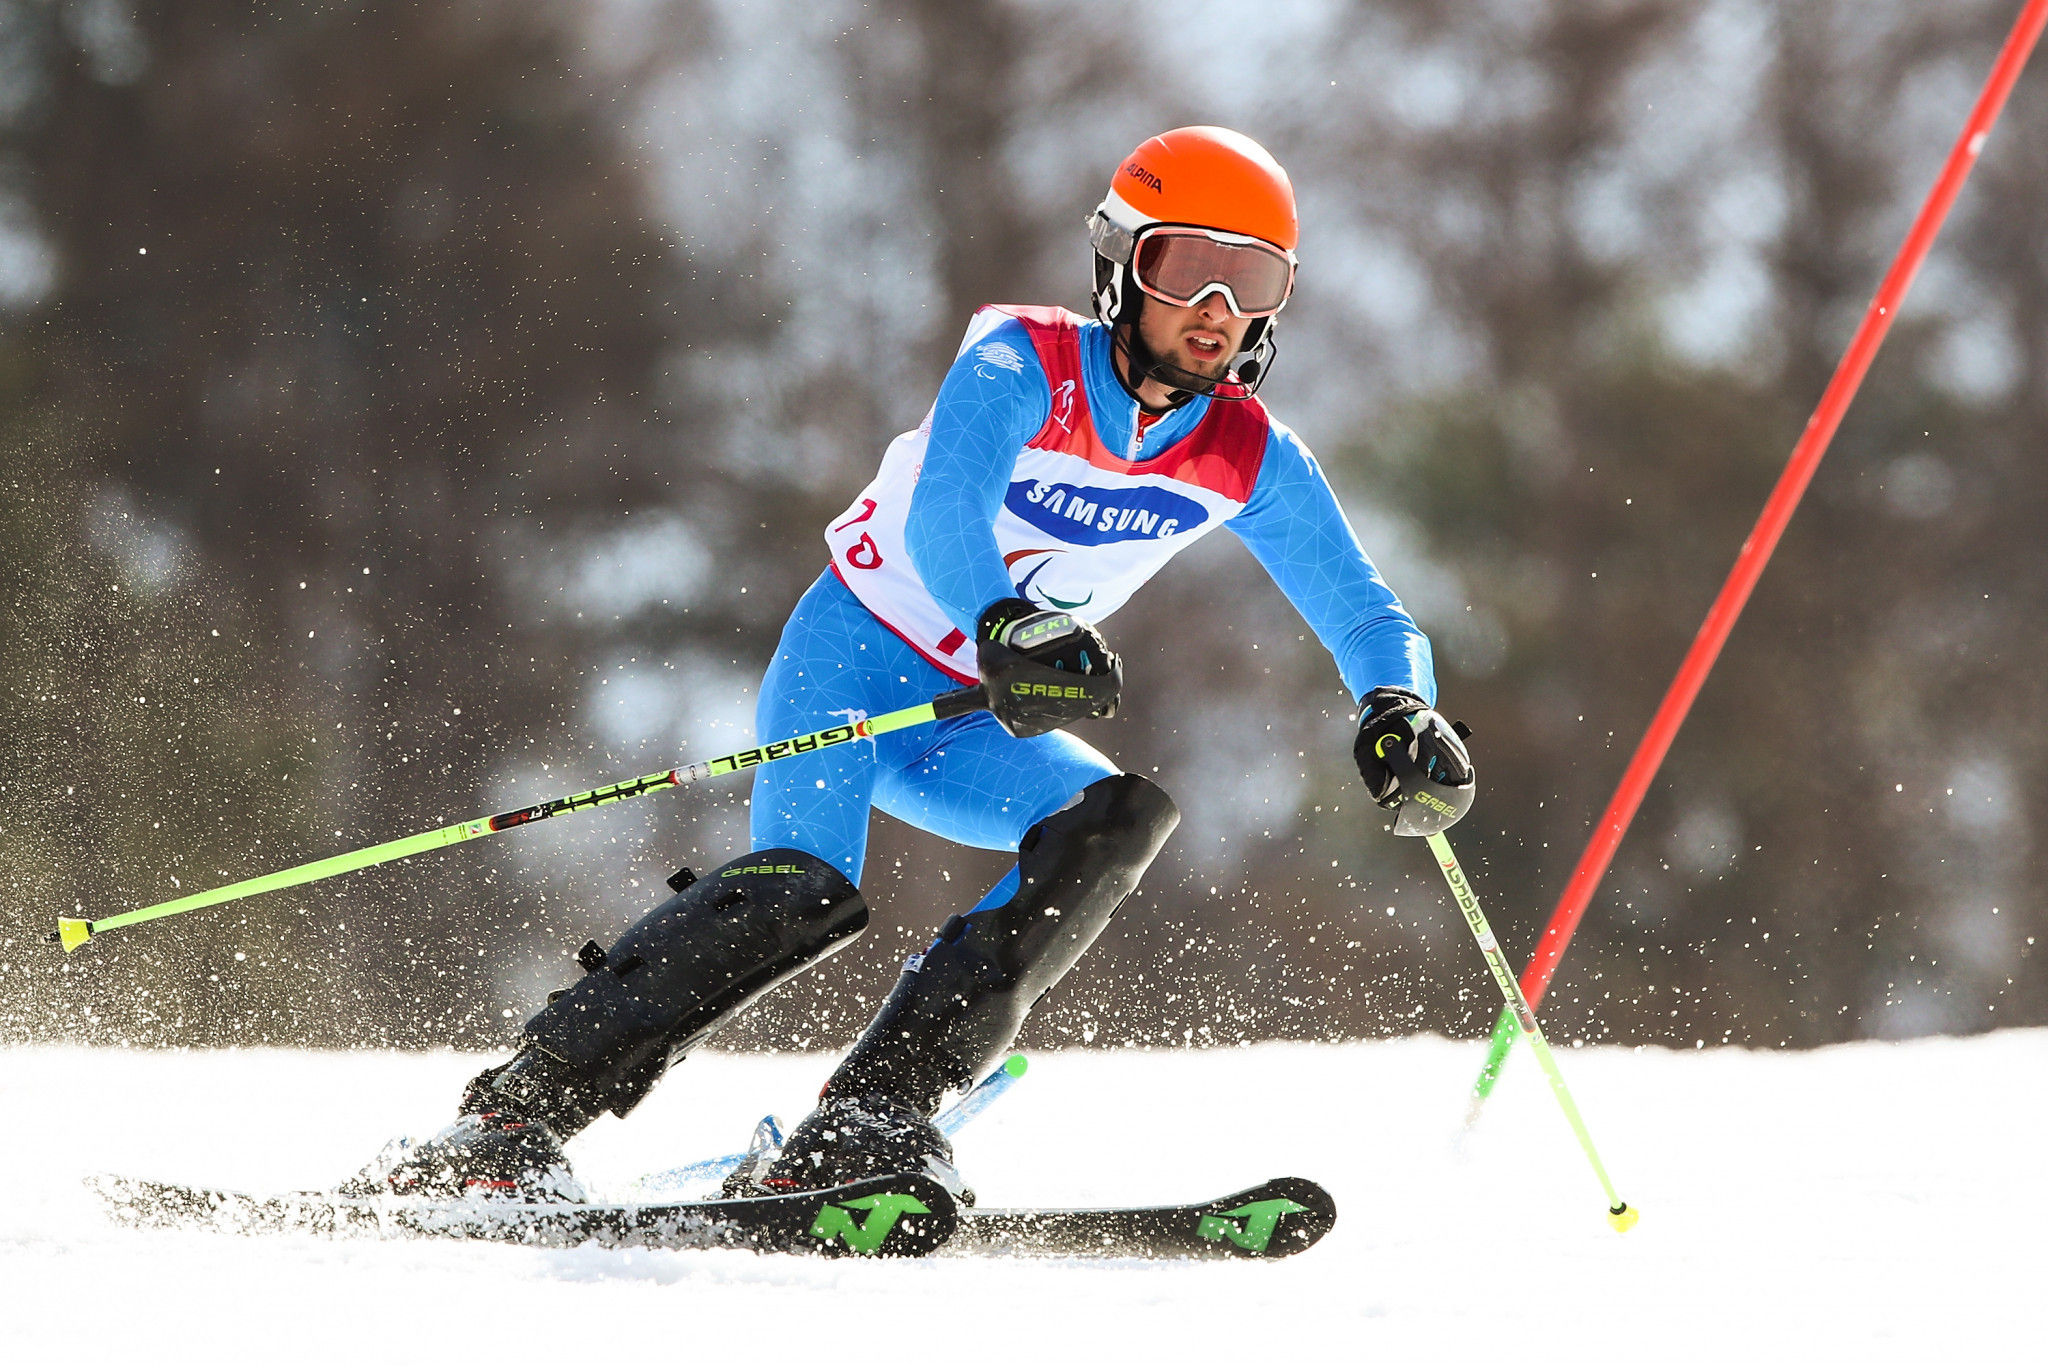 Bertagnolli completes hat-trick at World Para Alpine Skiing World Cup